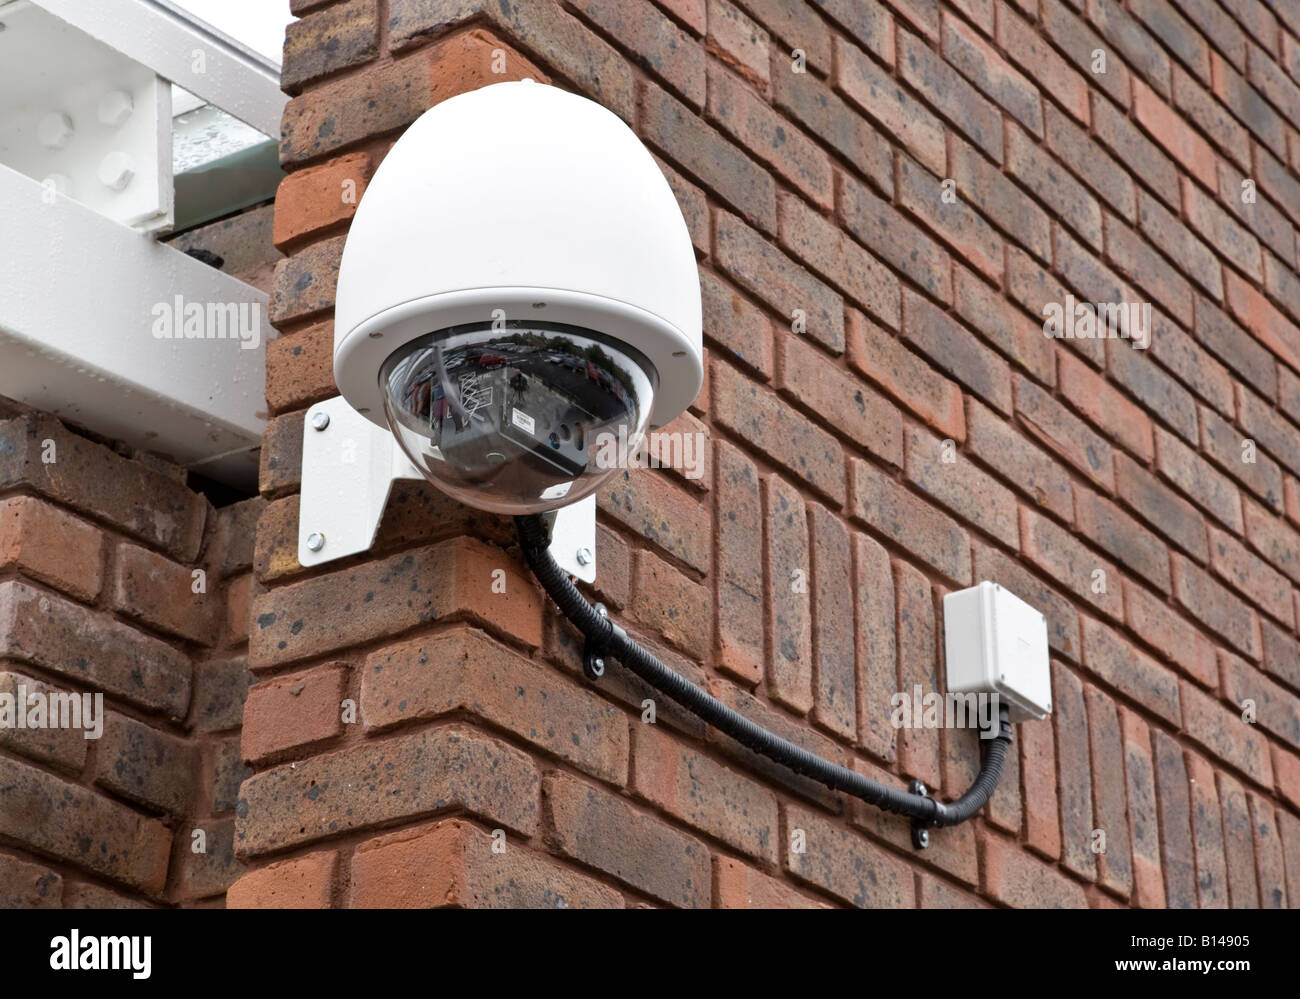 CCTV Security camera at a supermarket Stock Photo - Alamy